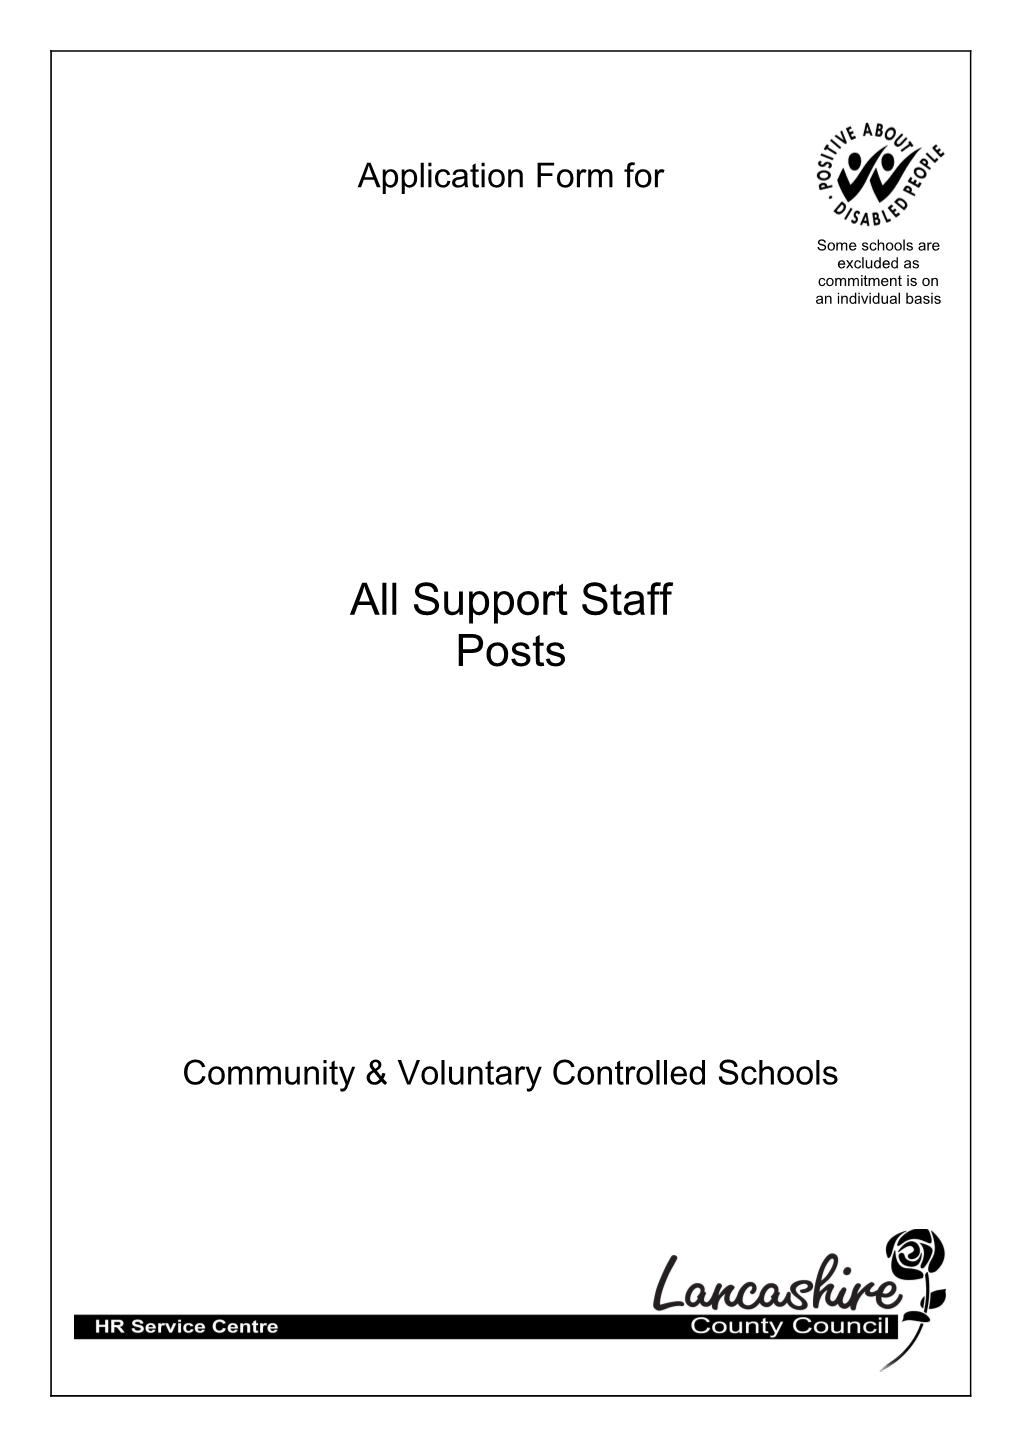 Community & Voluntary Controlled Schools